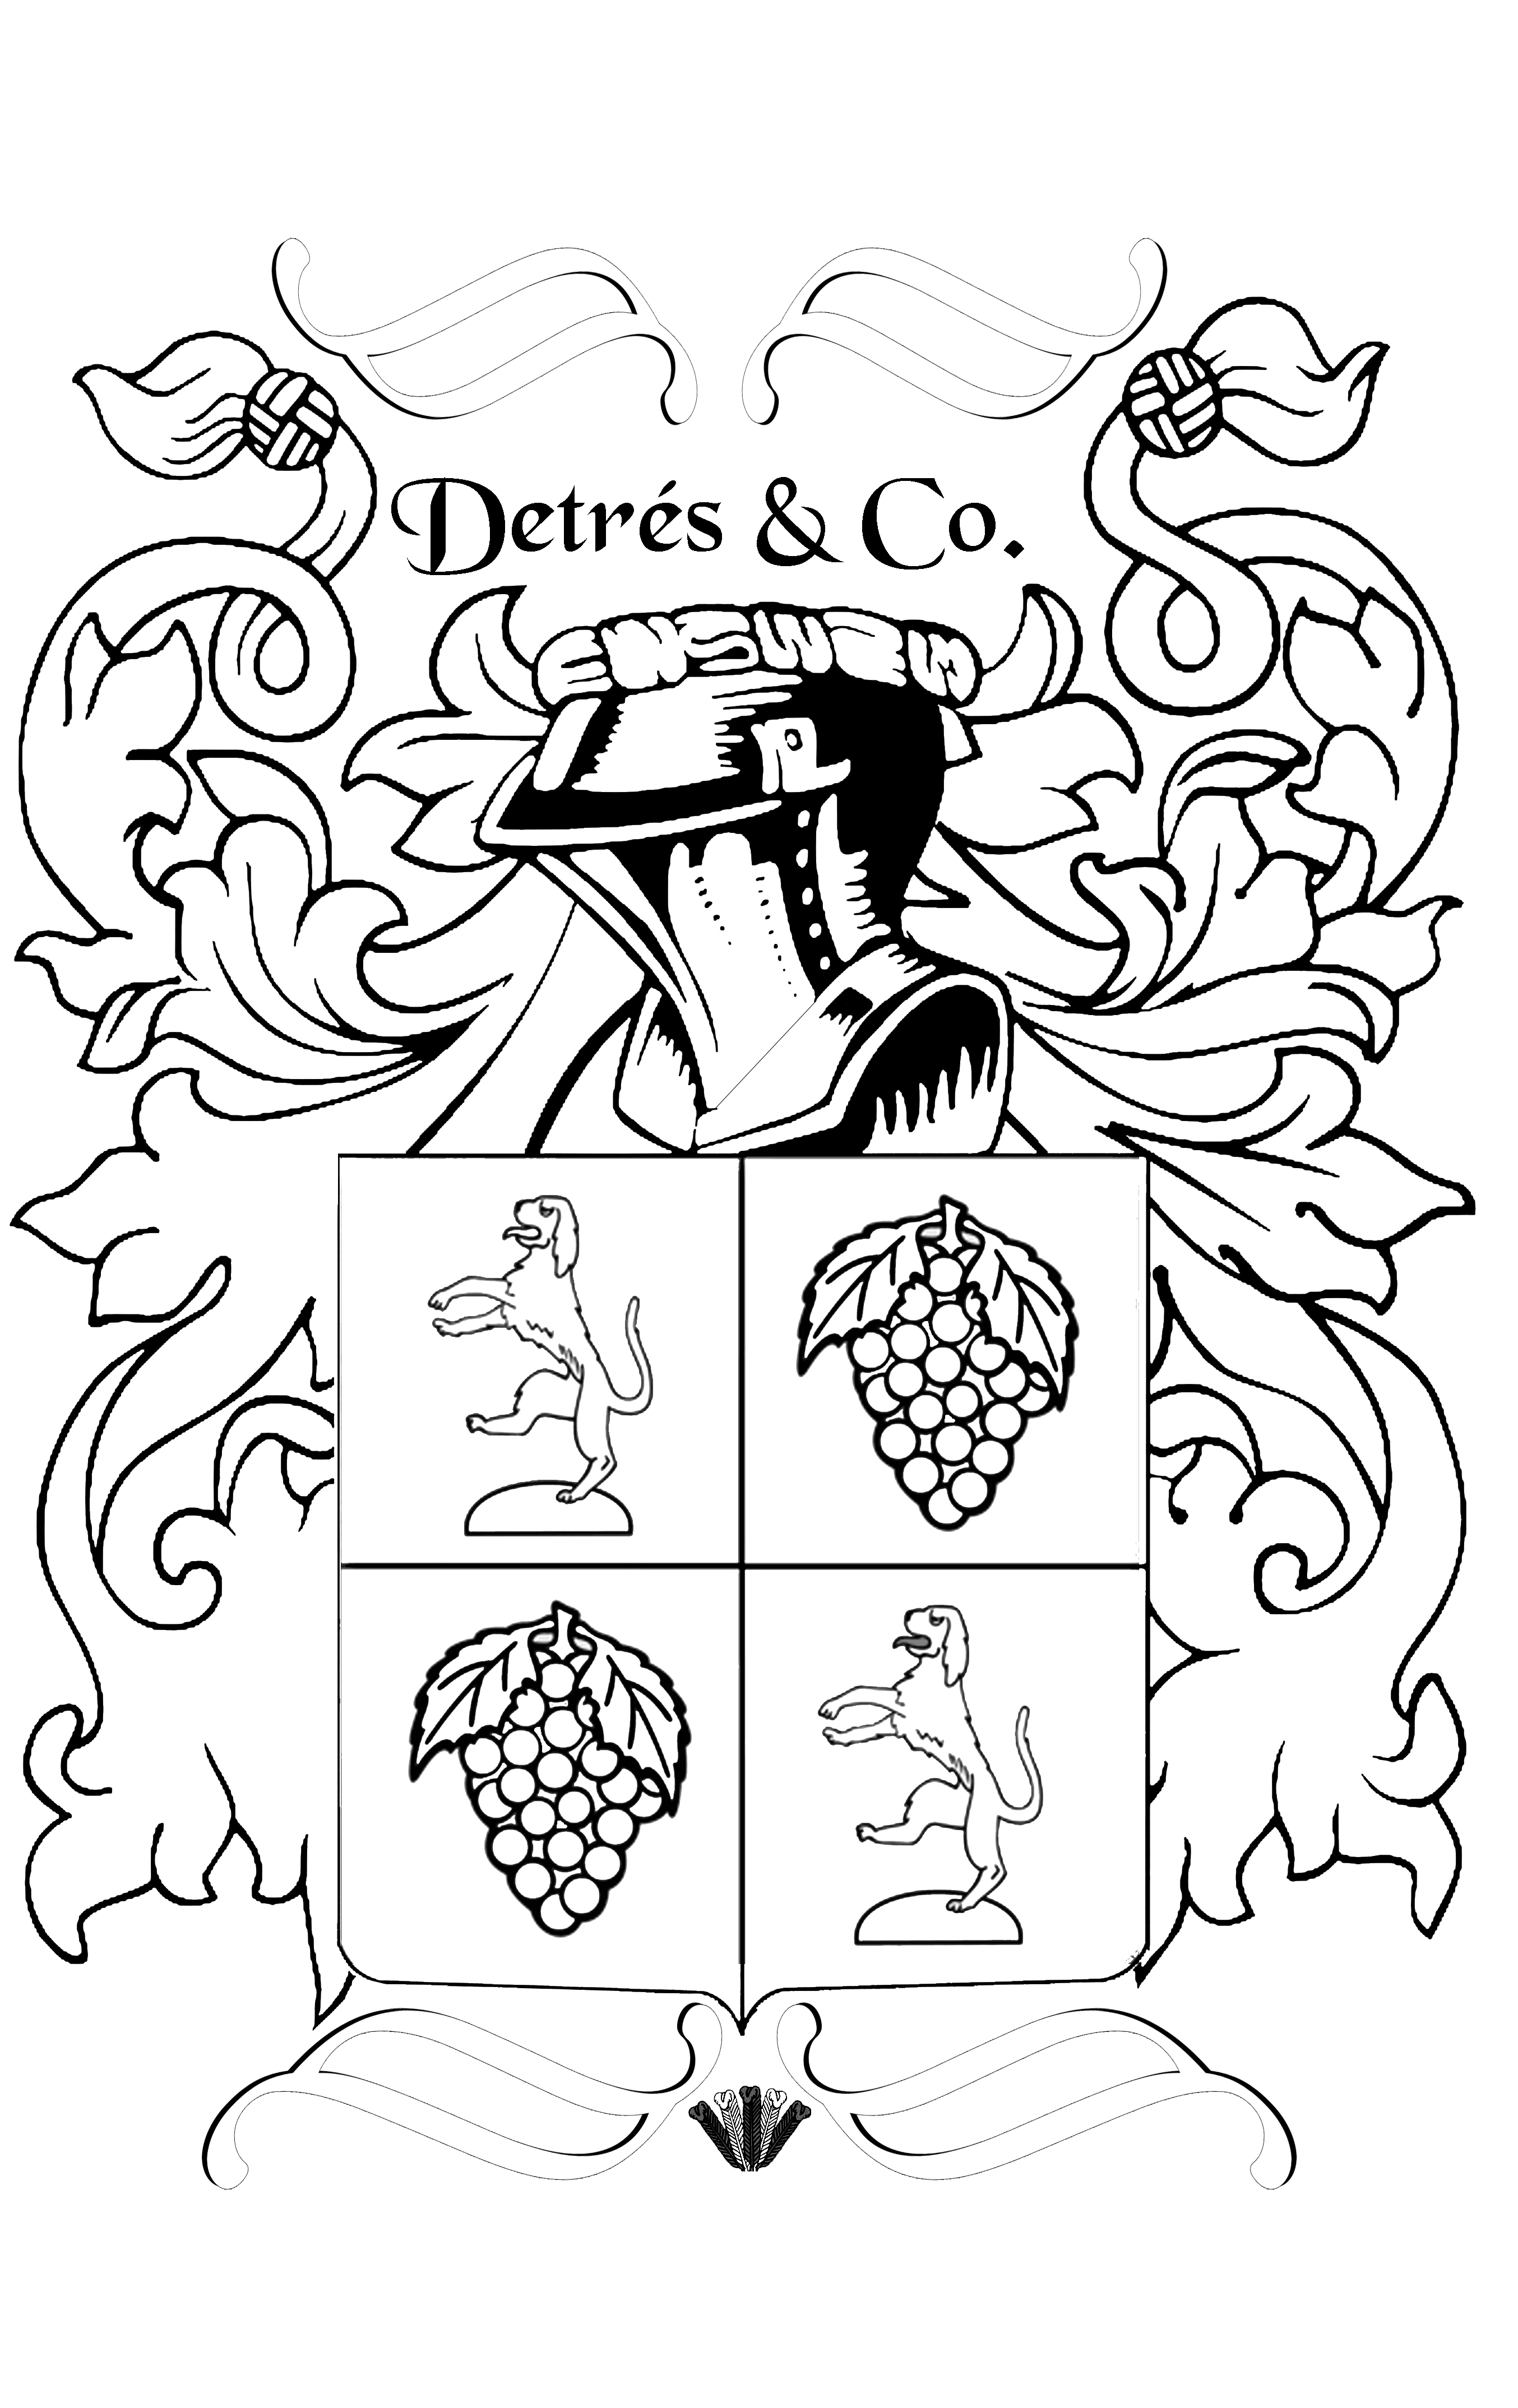 Detrés & Co., Inc.